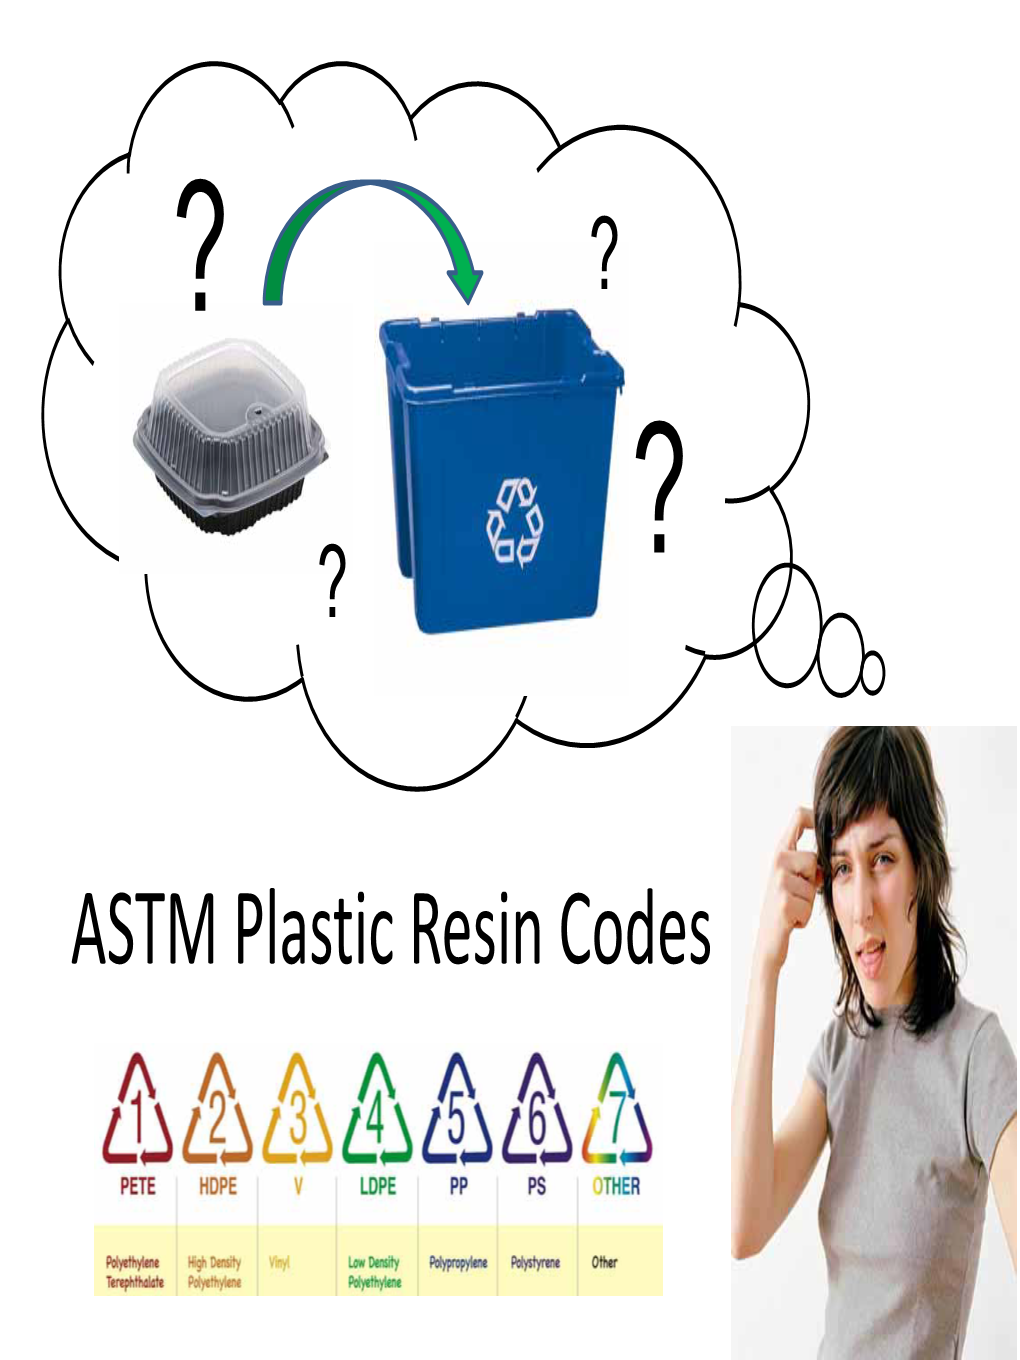 ASTM Plastic Resin Codes Background